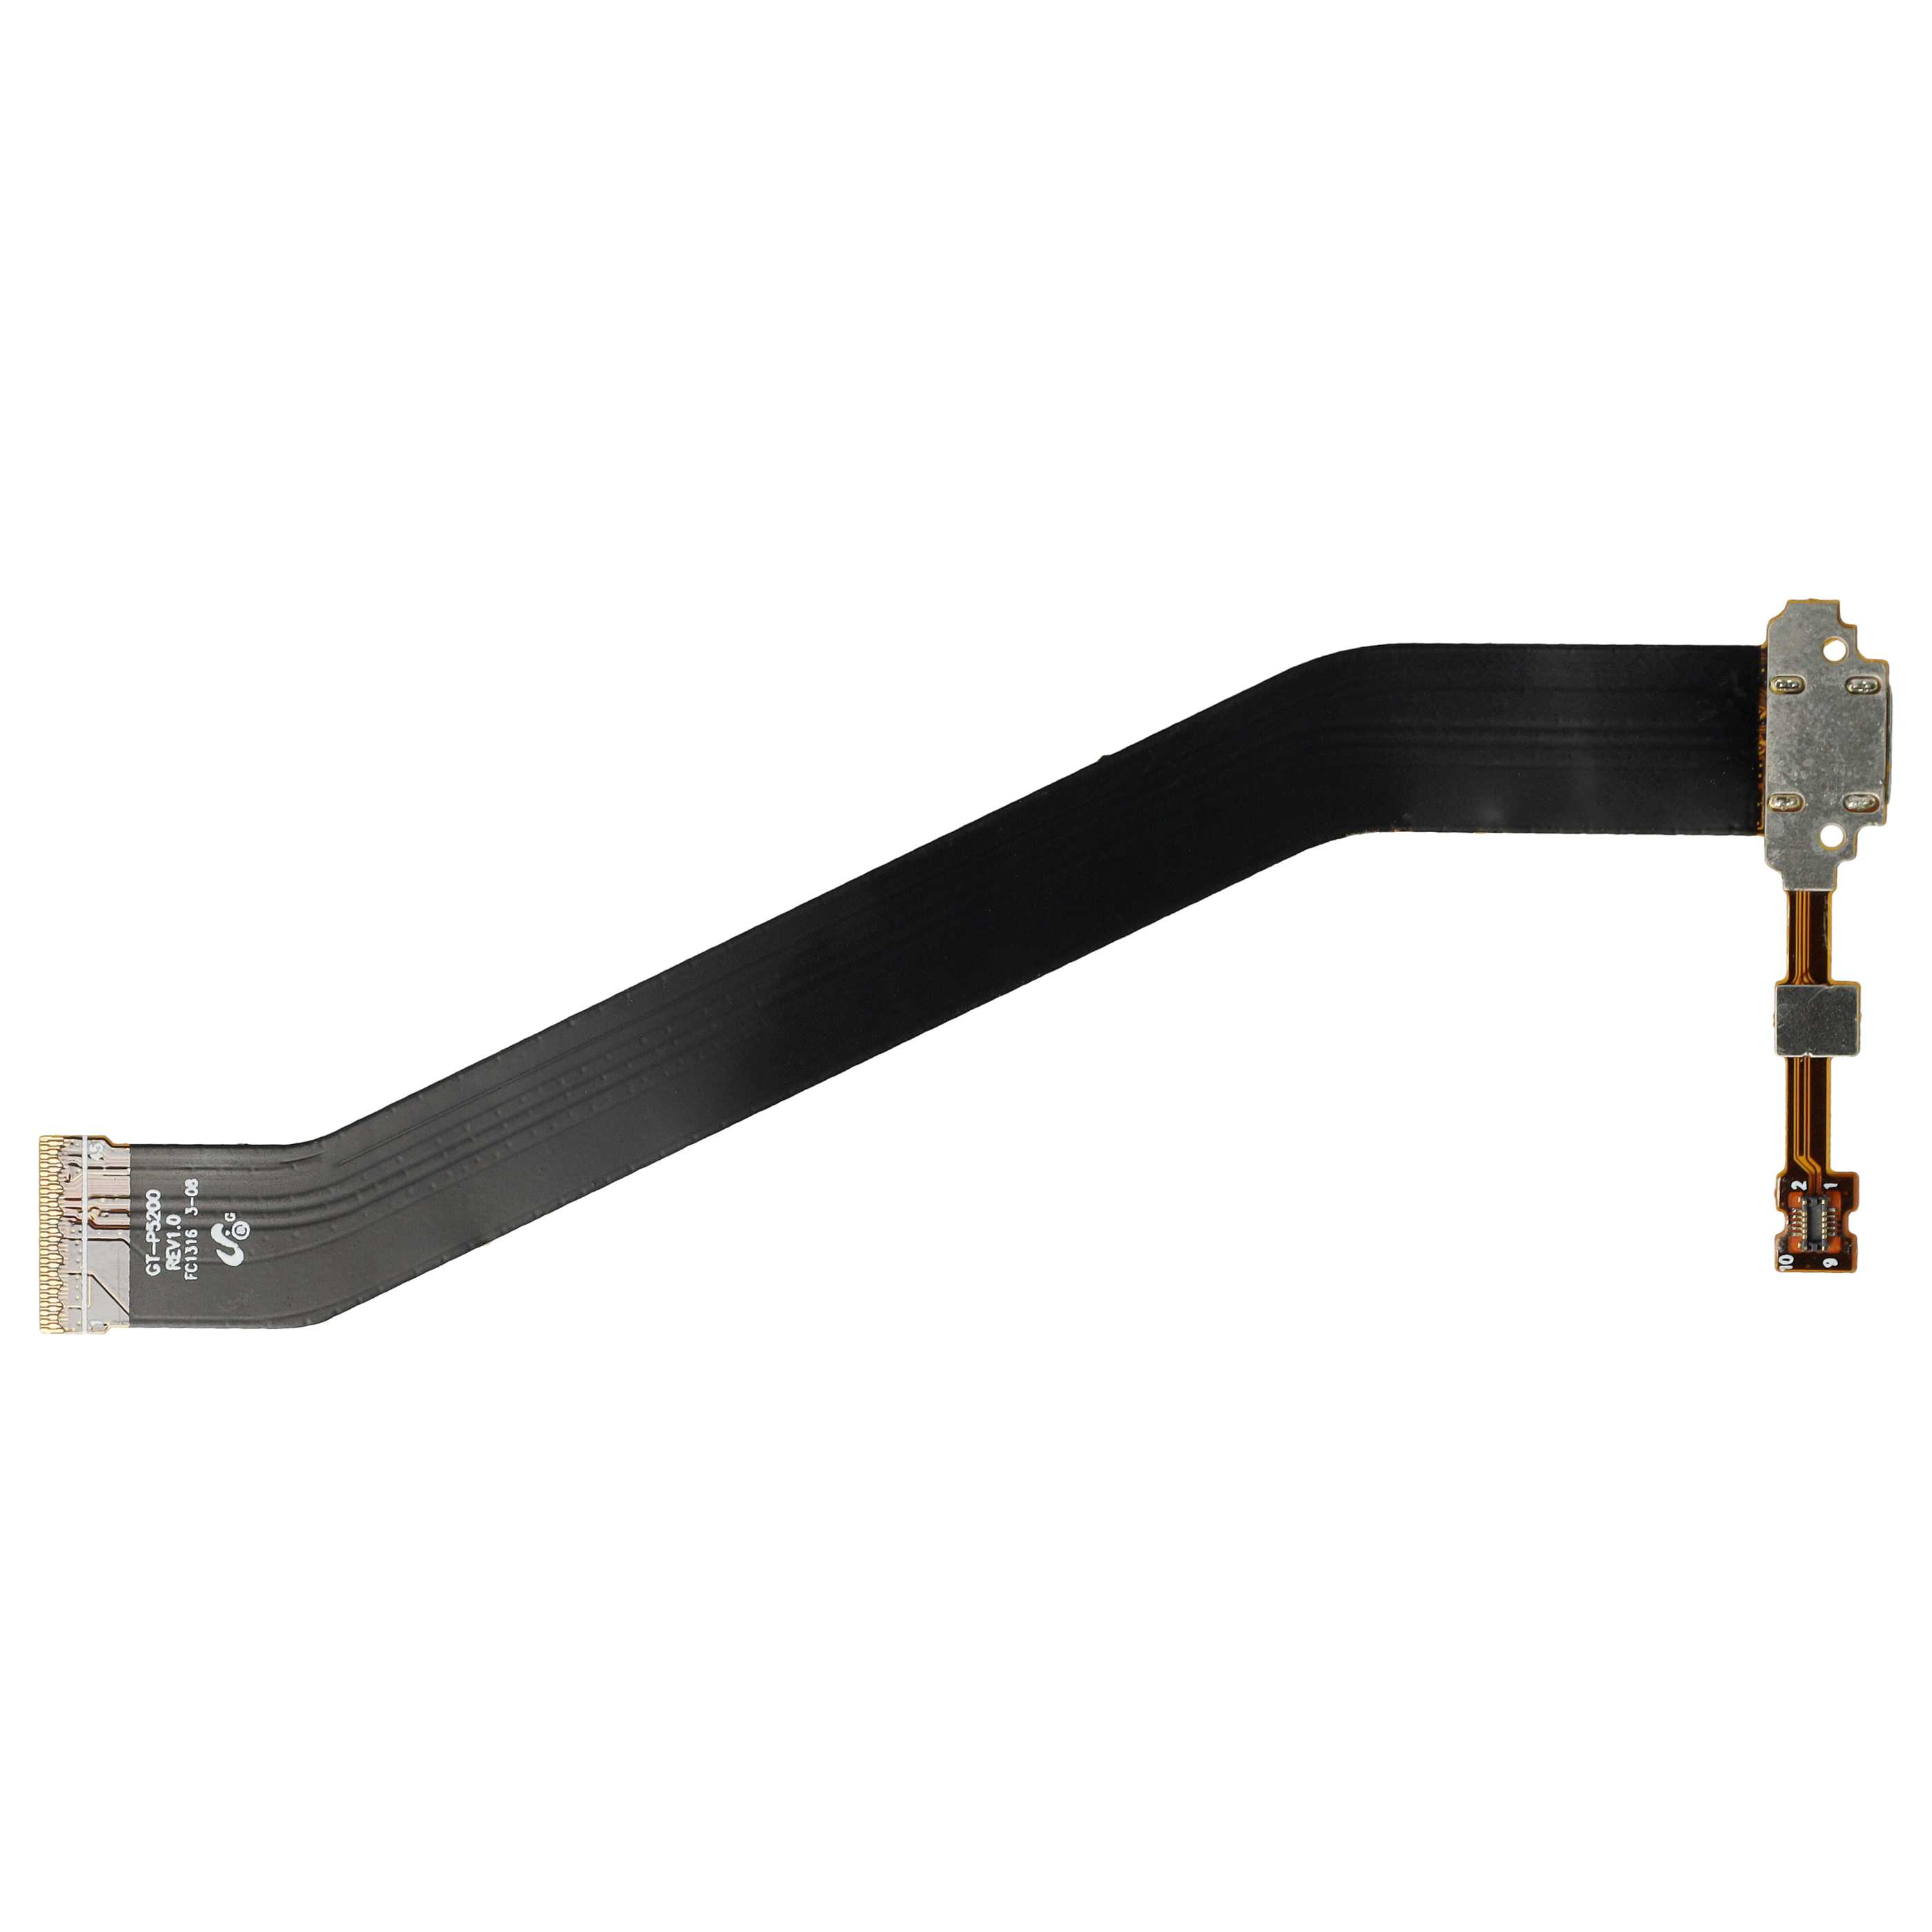 Clavija de carga micro USB para tablet Samsung Galaxy Tab 3 10.1 GT-P5200, GT-P5201, GT-P5210, GT-P5220